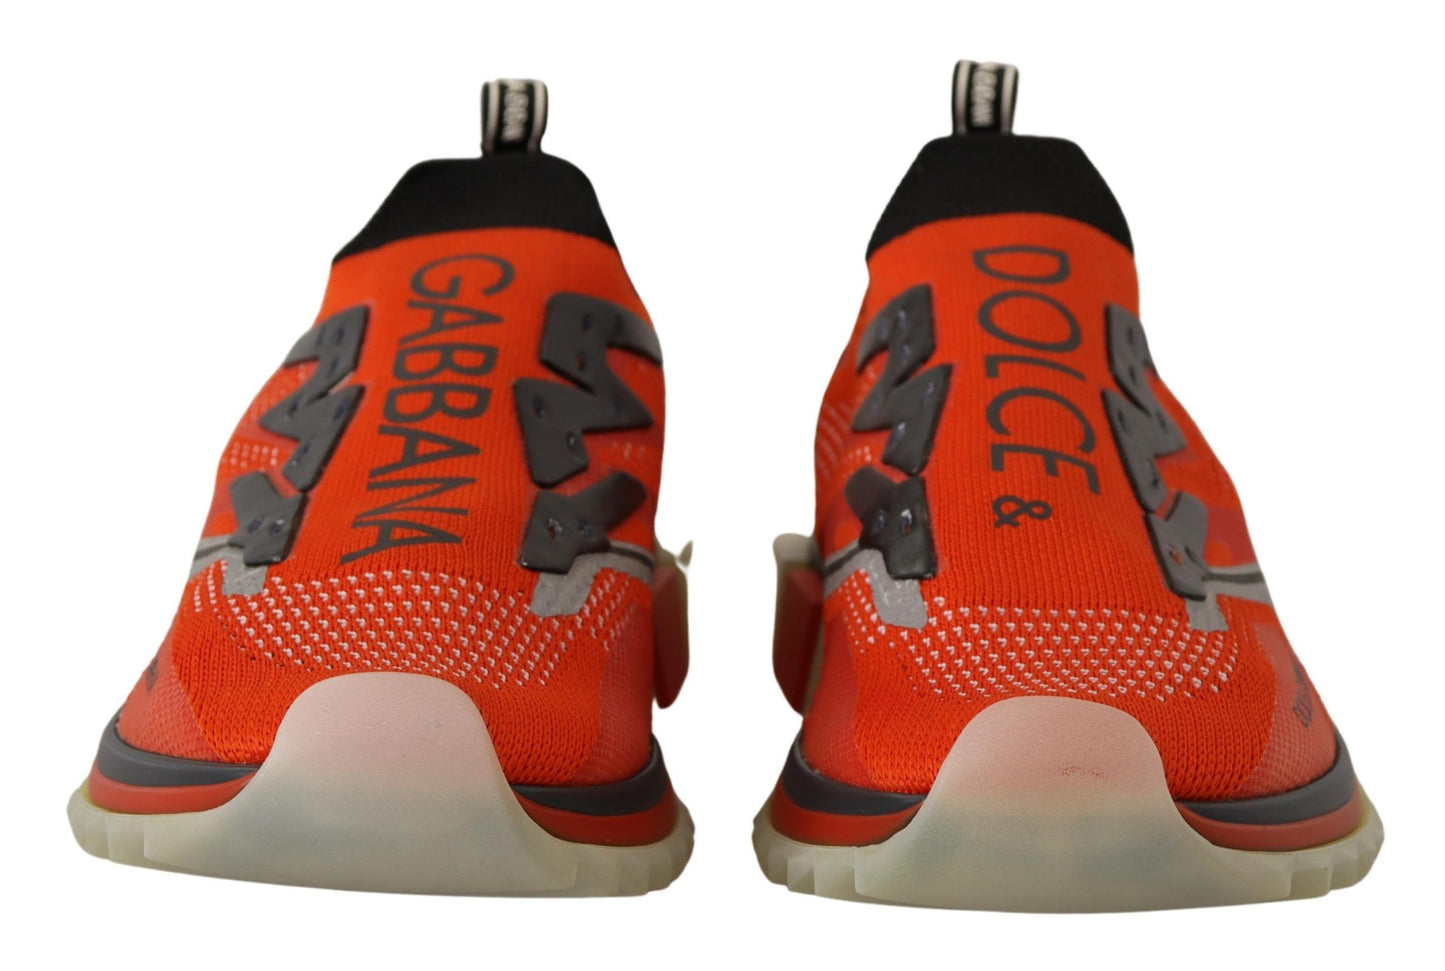 Orange and Gray Sorrento Sneakers